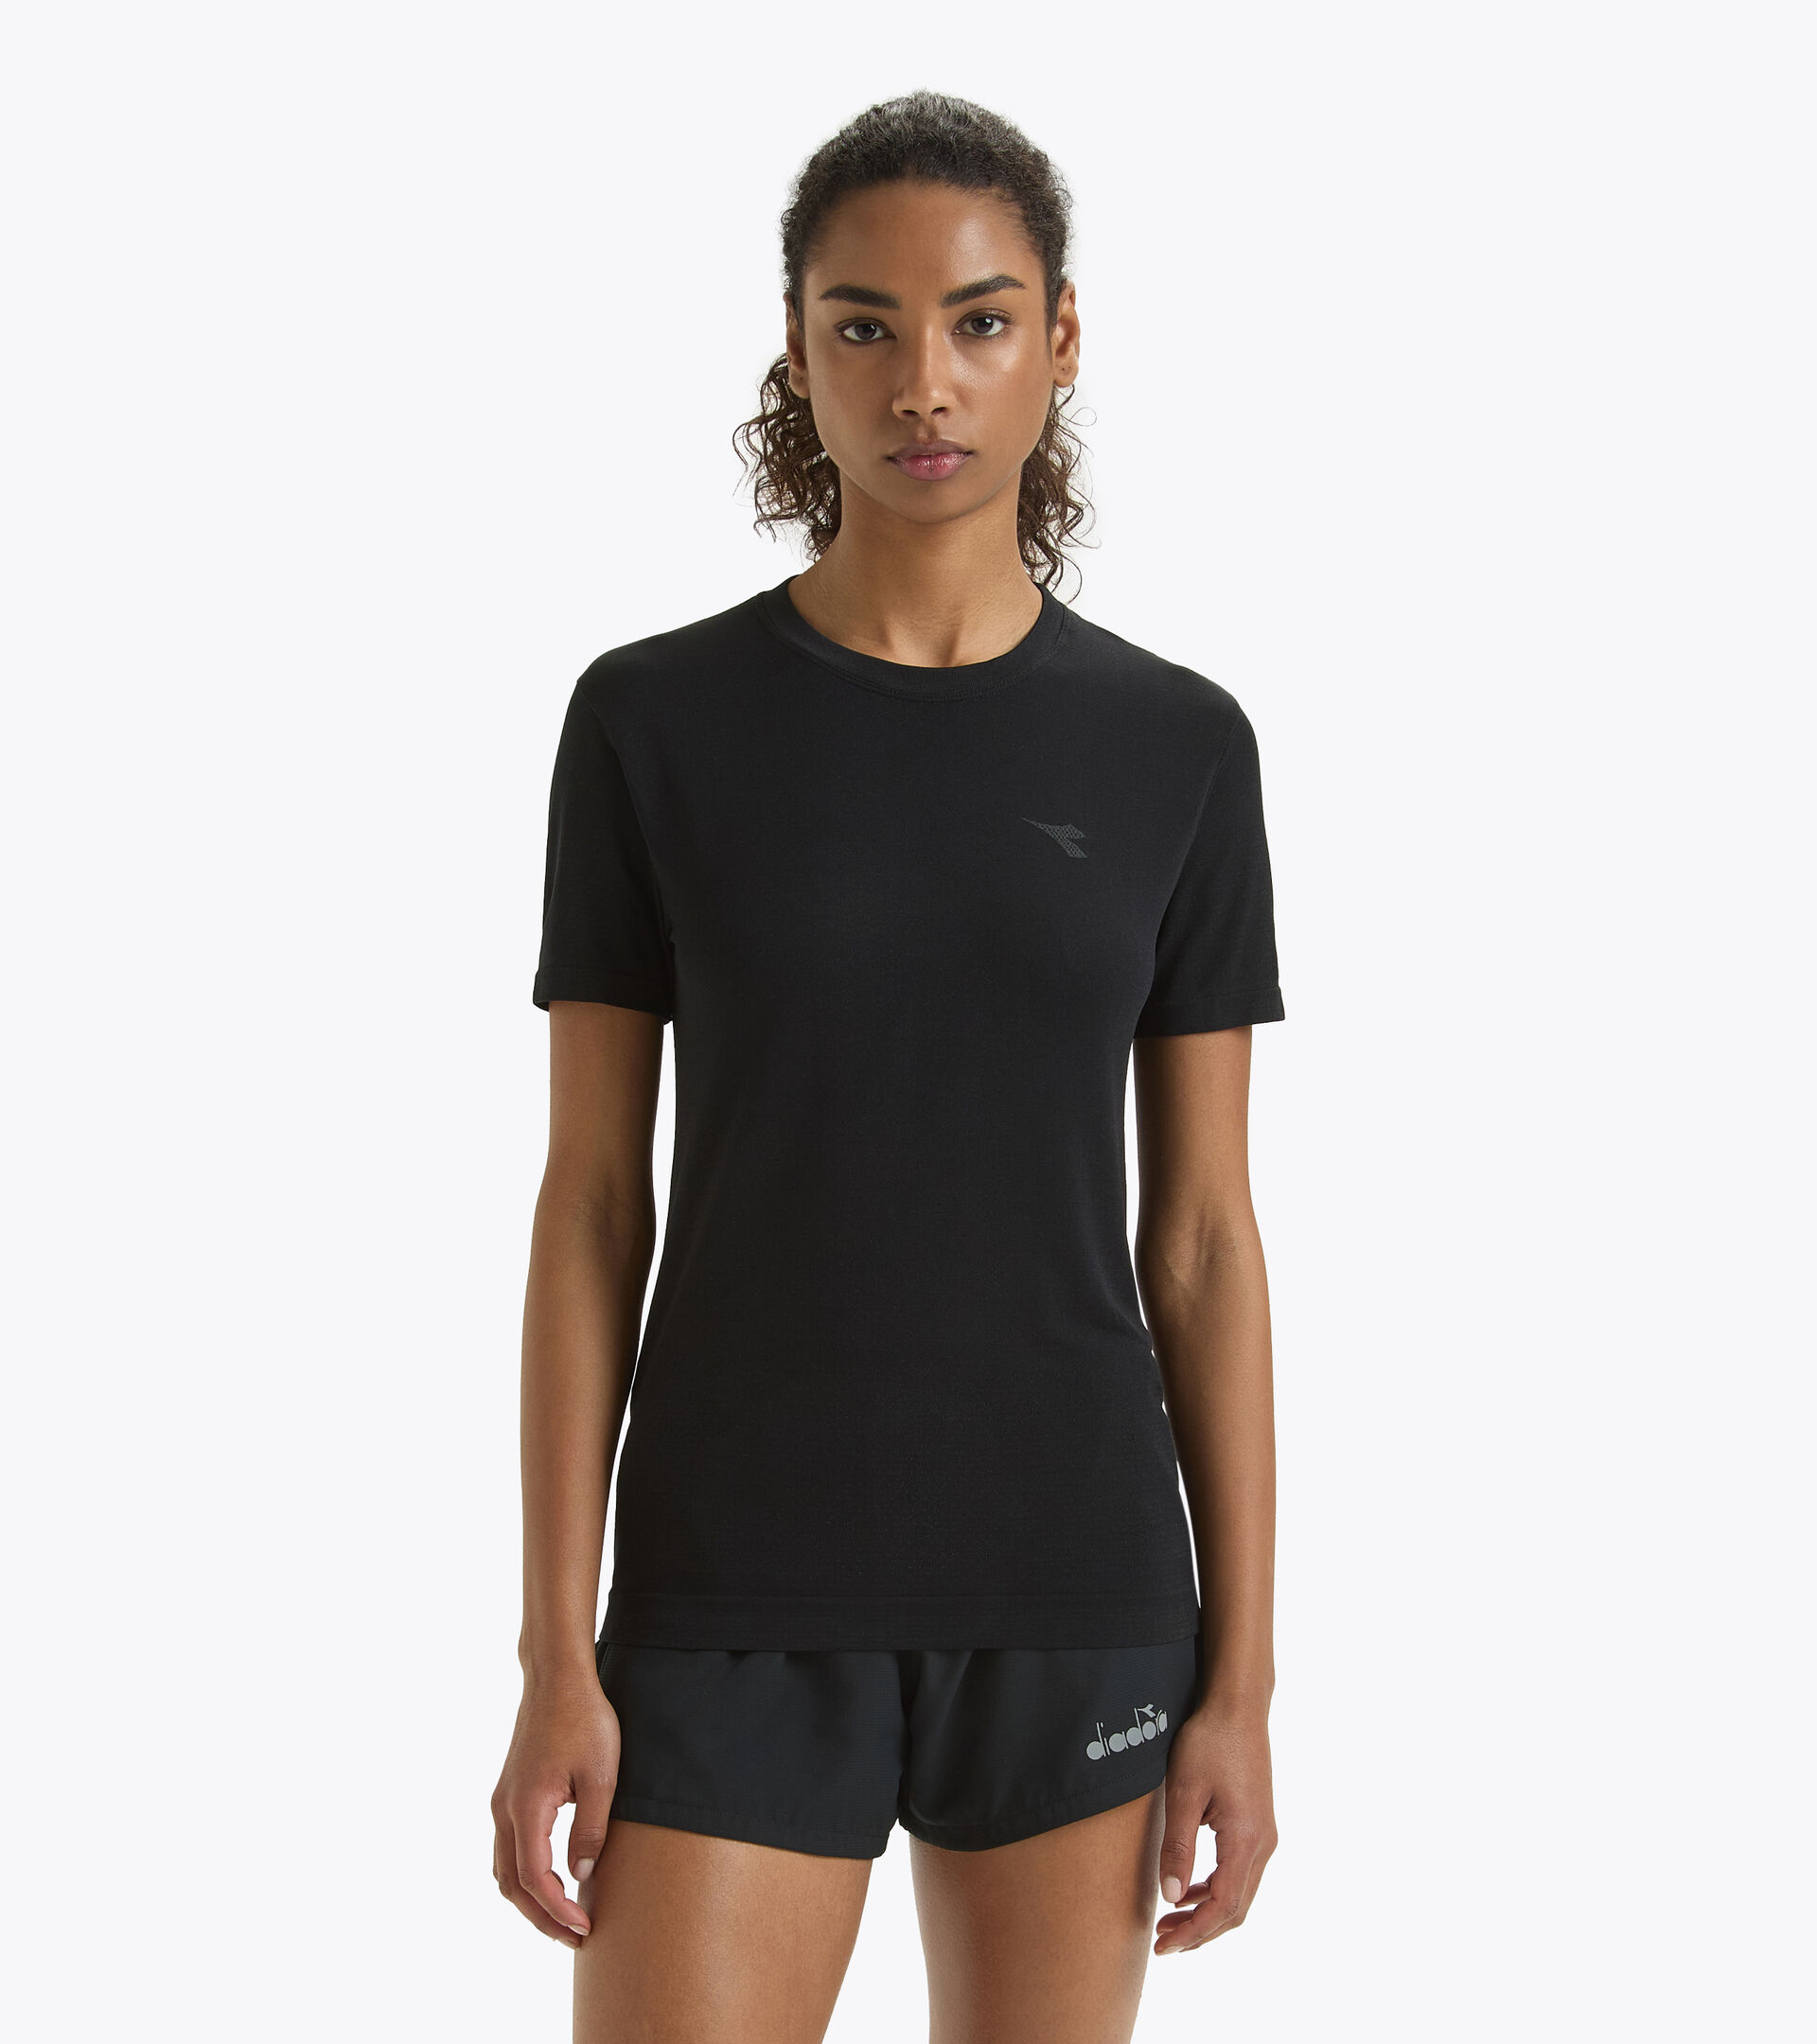 Seamless running t-shirt - Made in Italy - Women’s L. SS T-SHIRT SKIN FRIENDLY BLACK - Diadora